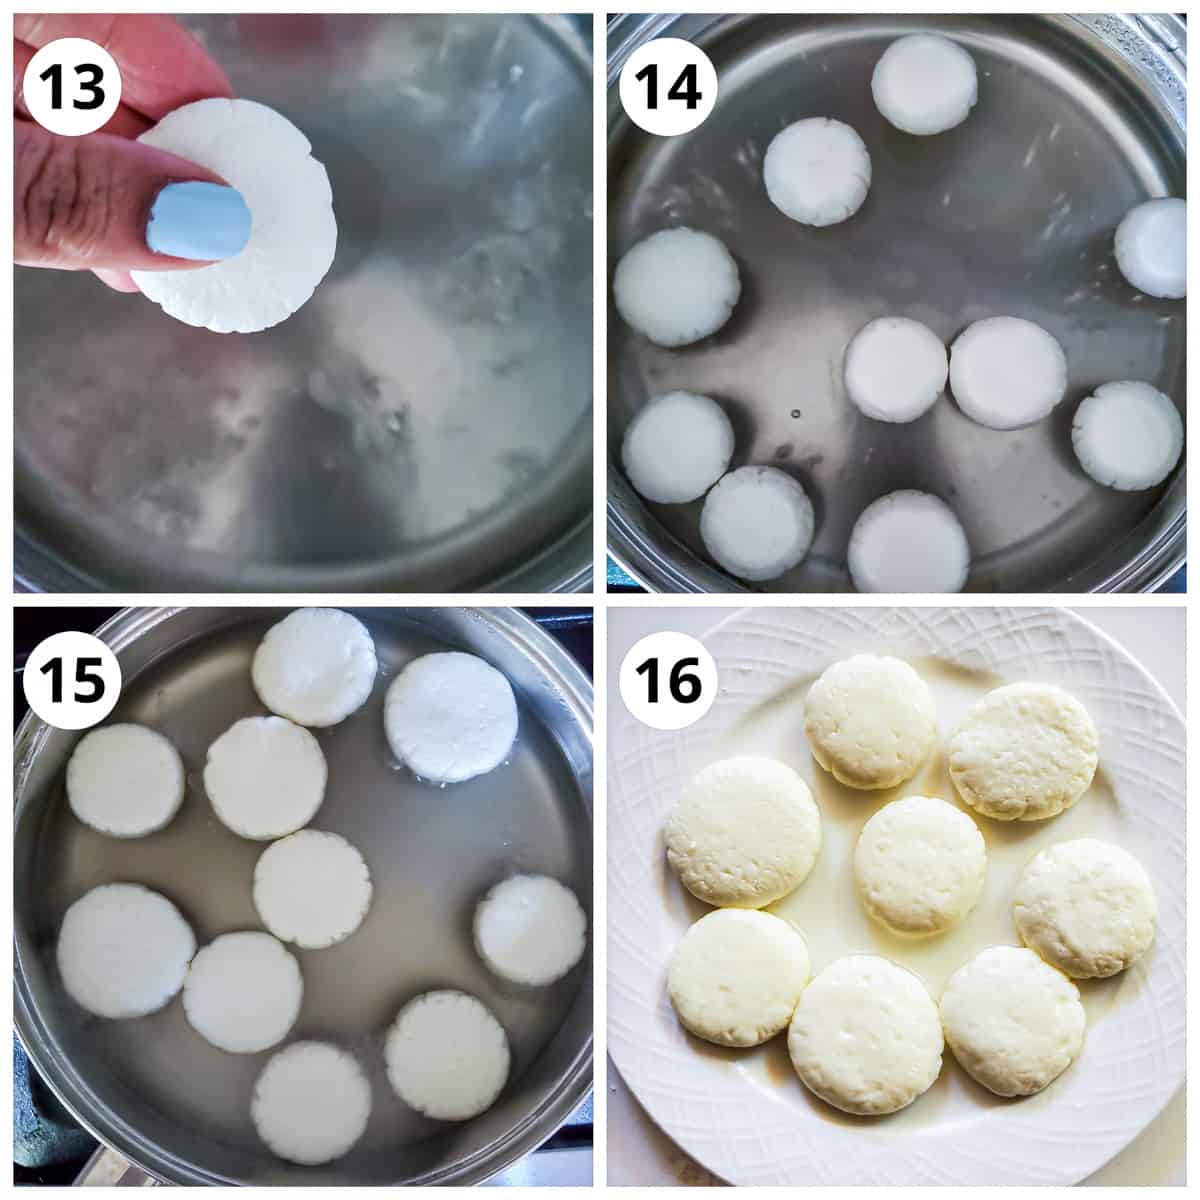 Soaking rasmalai balls in sugar syrup